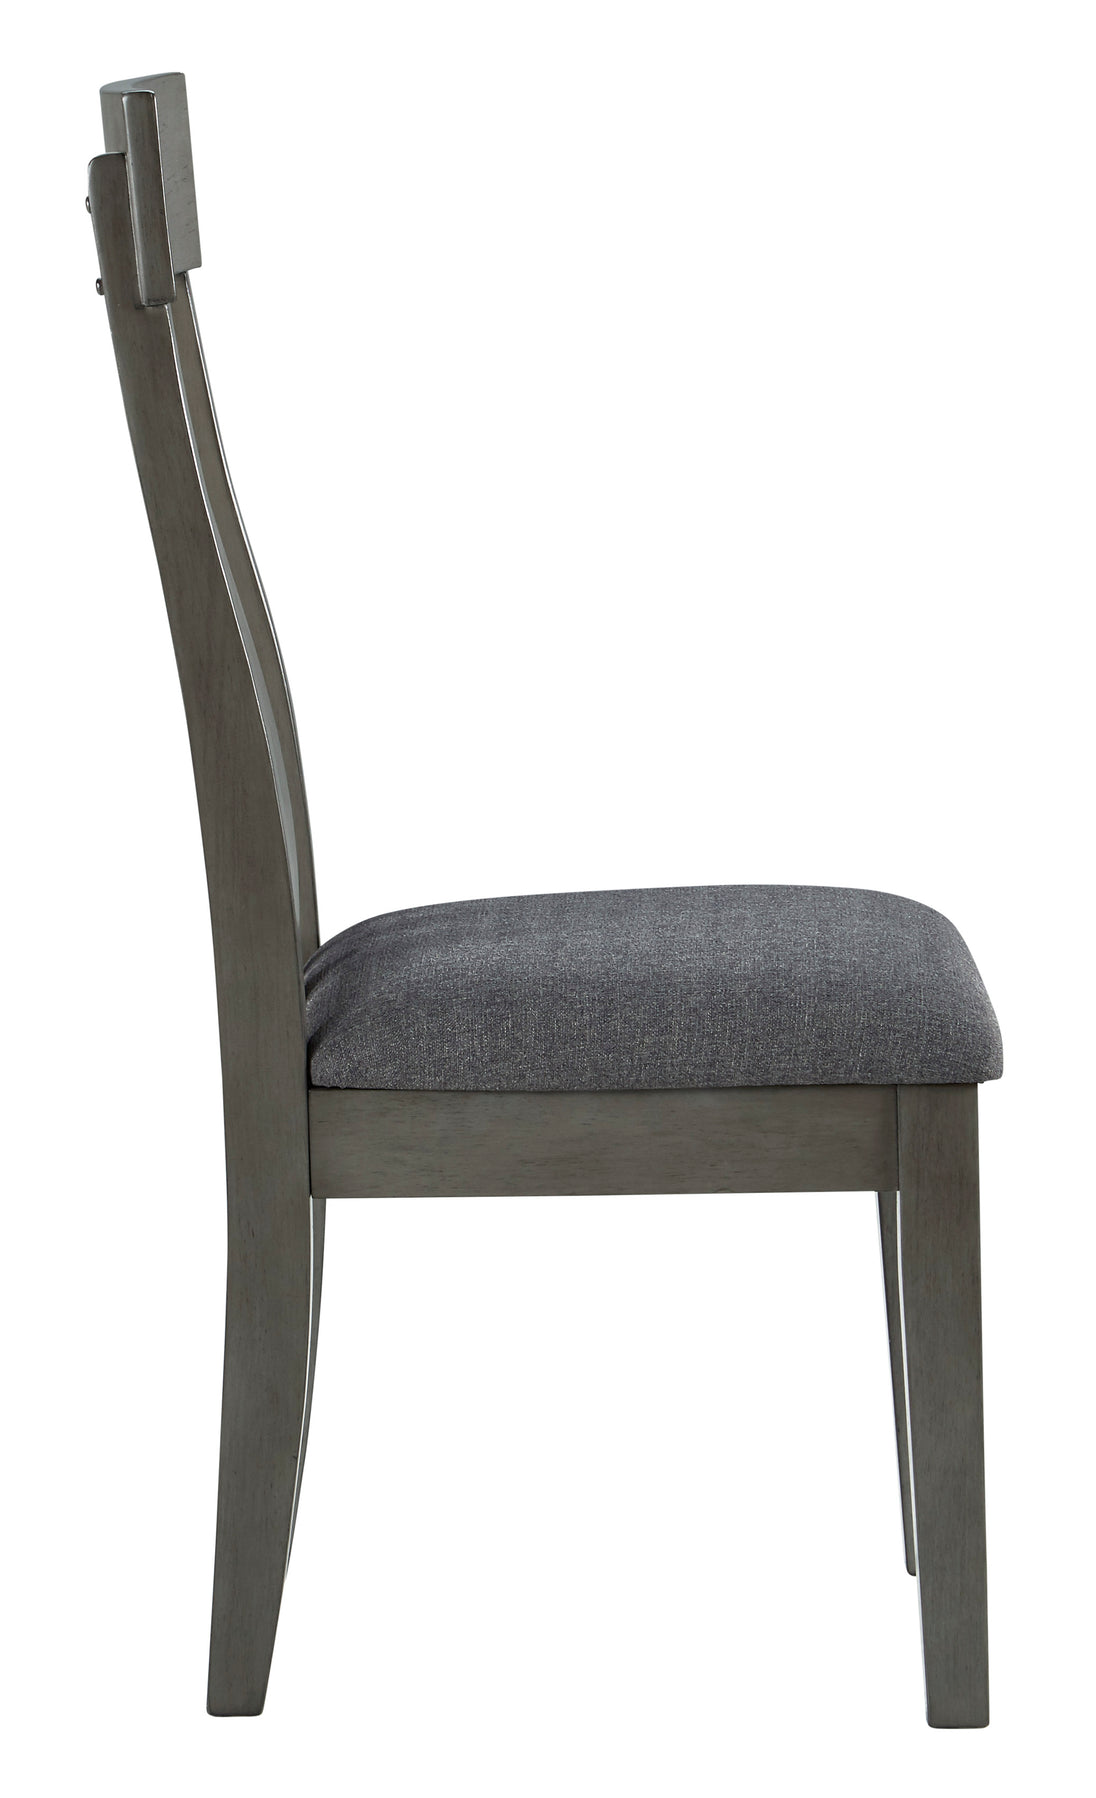 Hallanden Dining Chair (set of 2) - Furniture Depot (7727921856760)